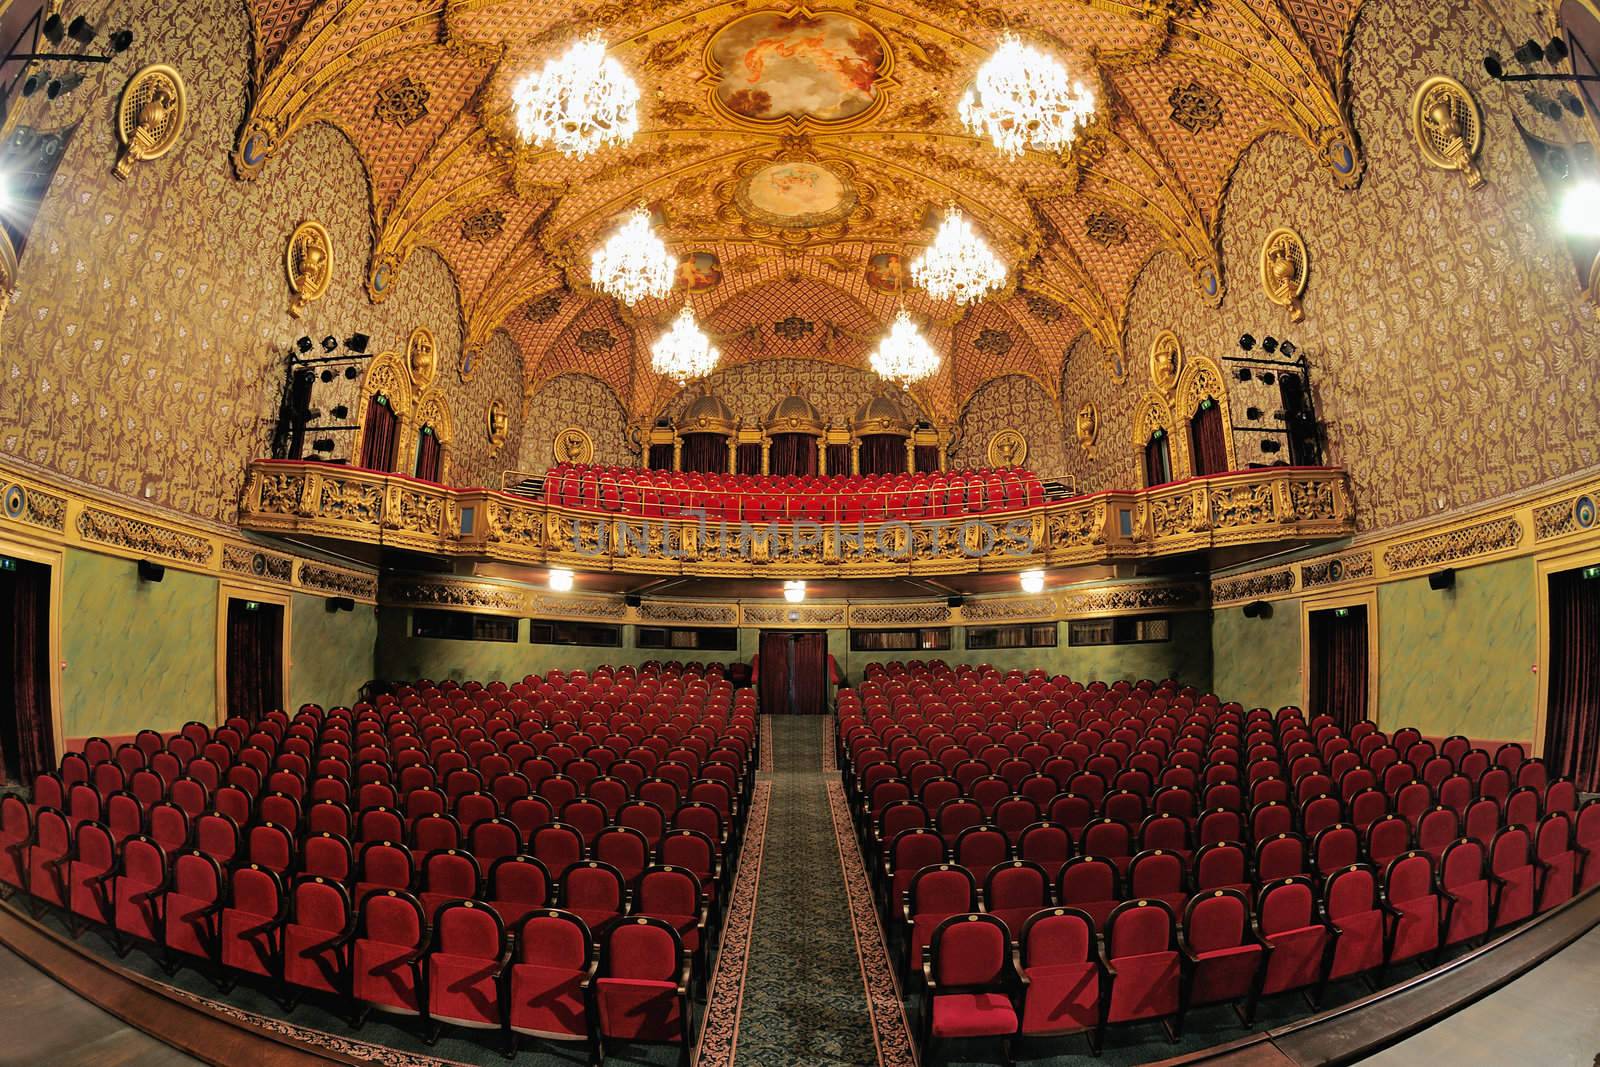 Interior of the theater auditorium, without spectators